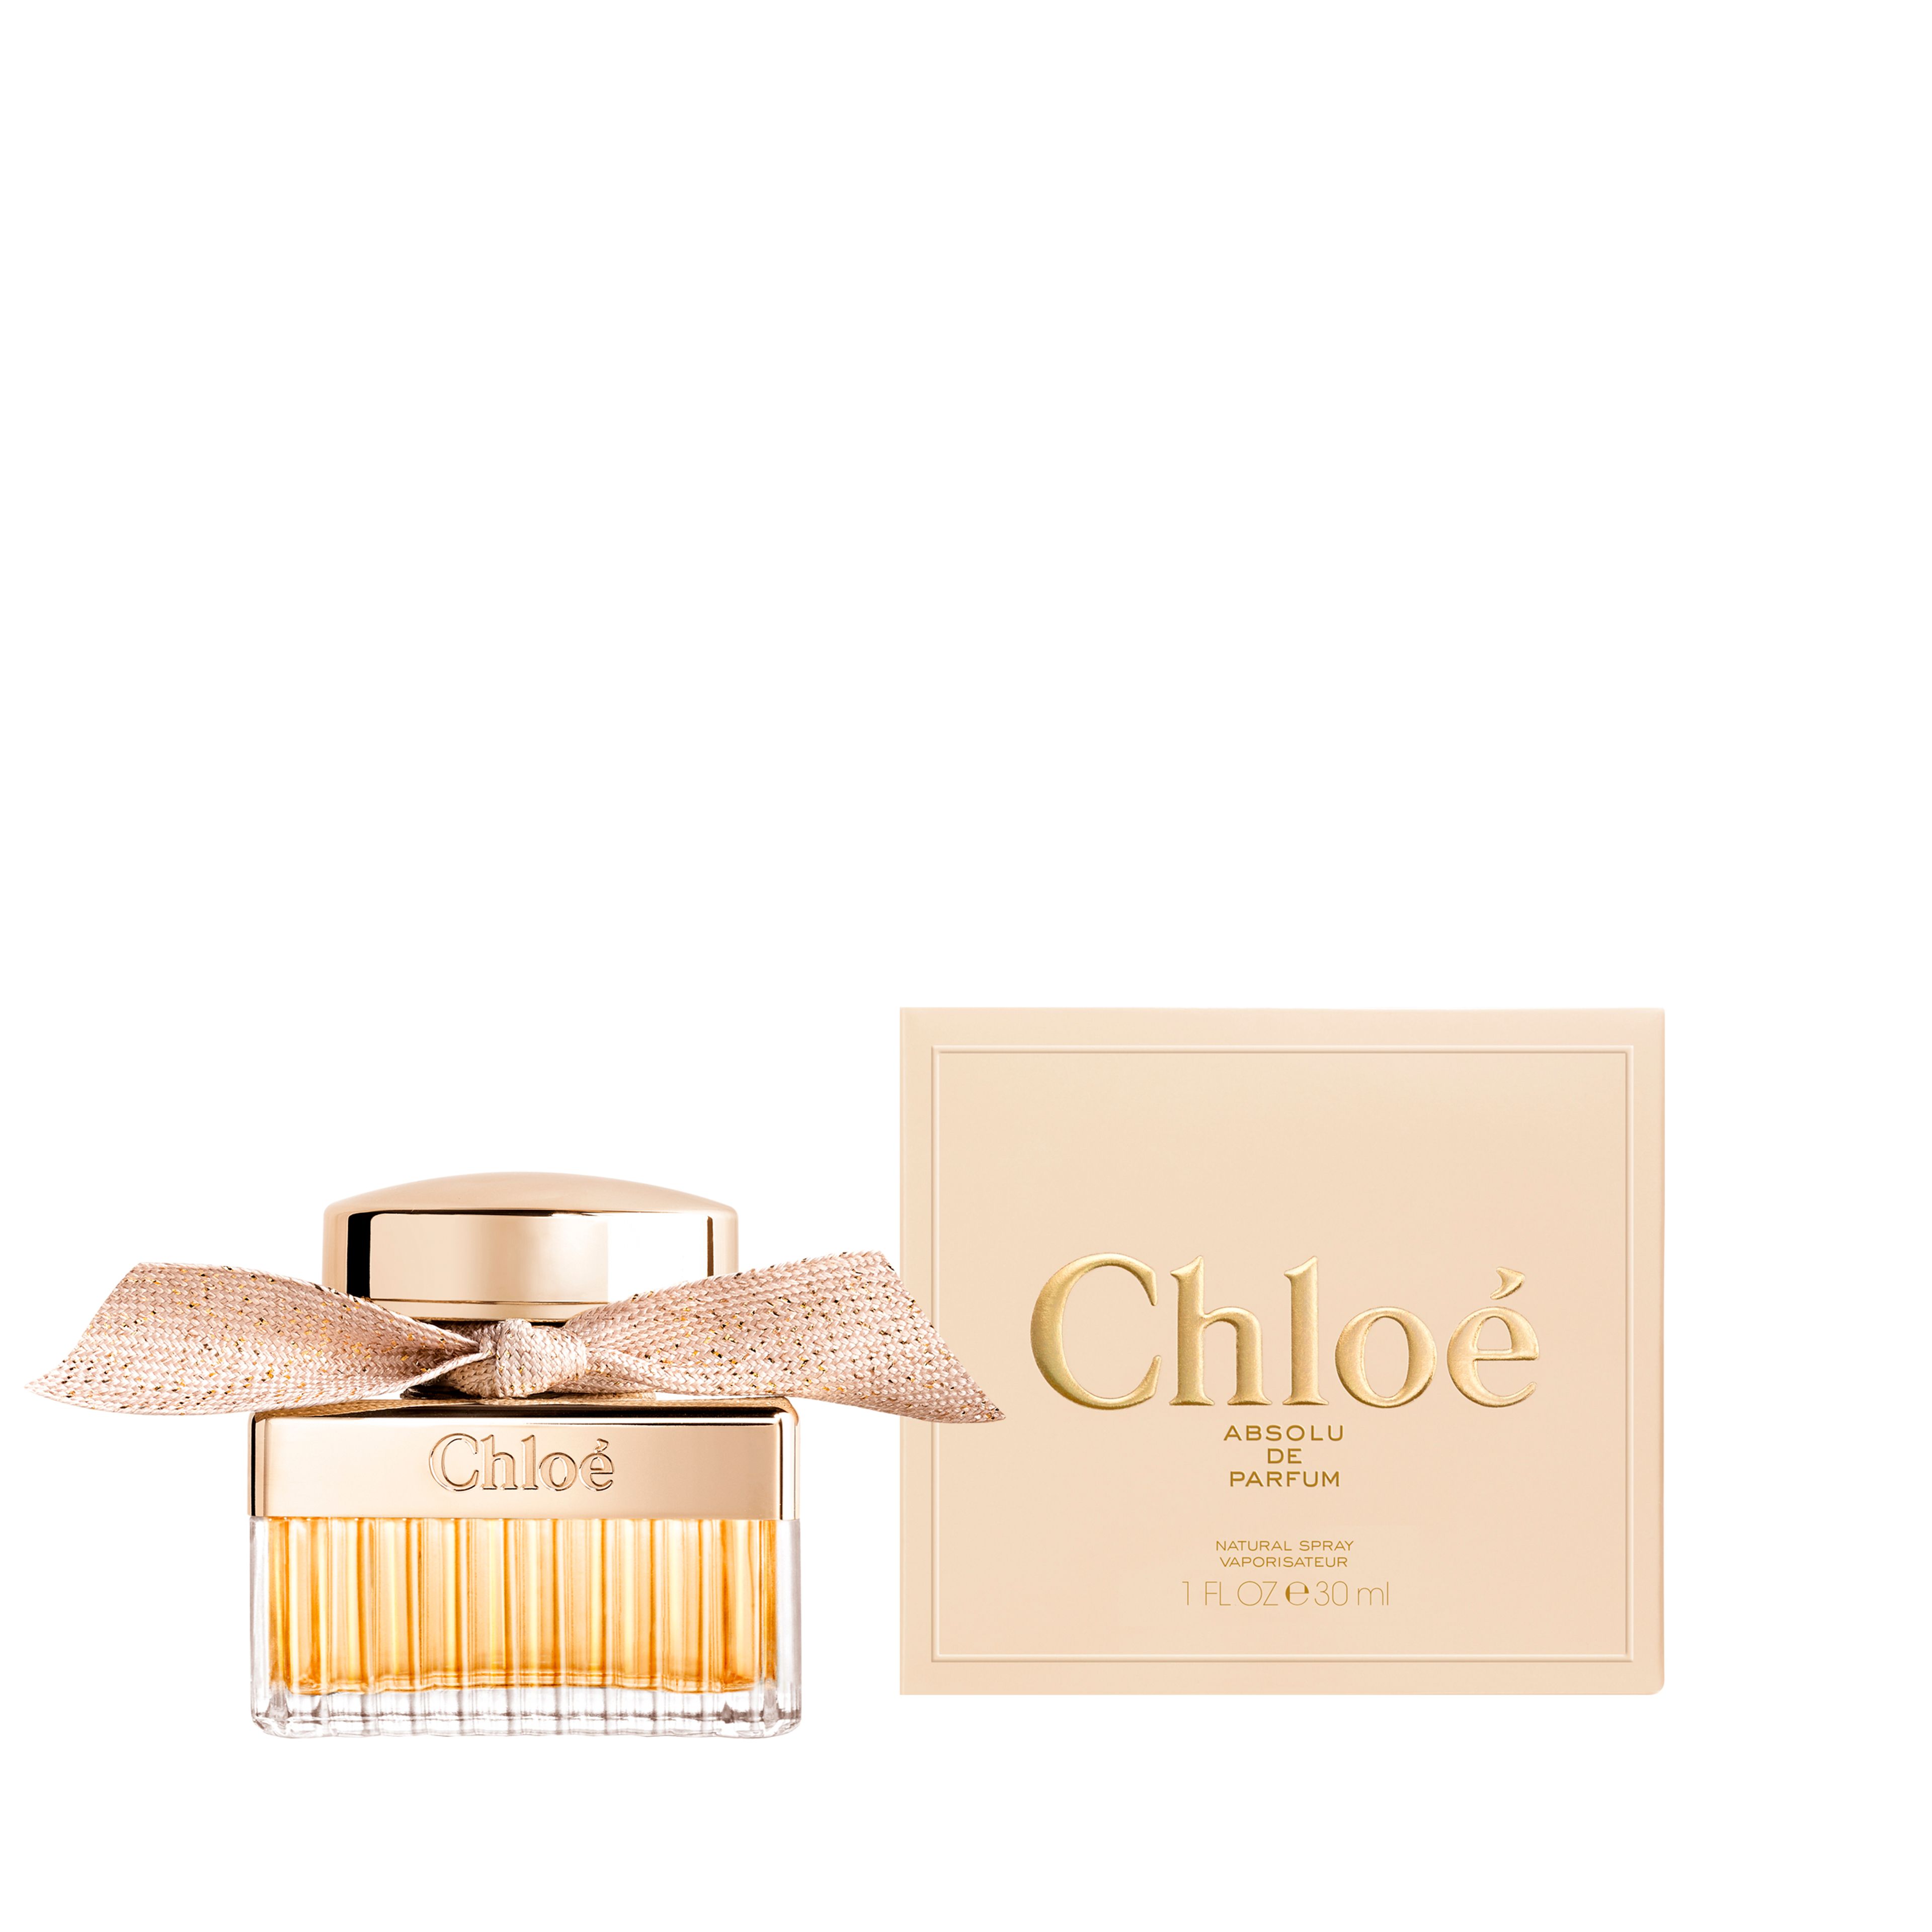 Chloé Chloé Absolu De Parfum 2